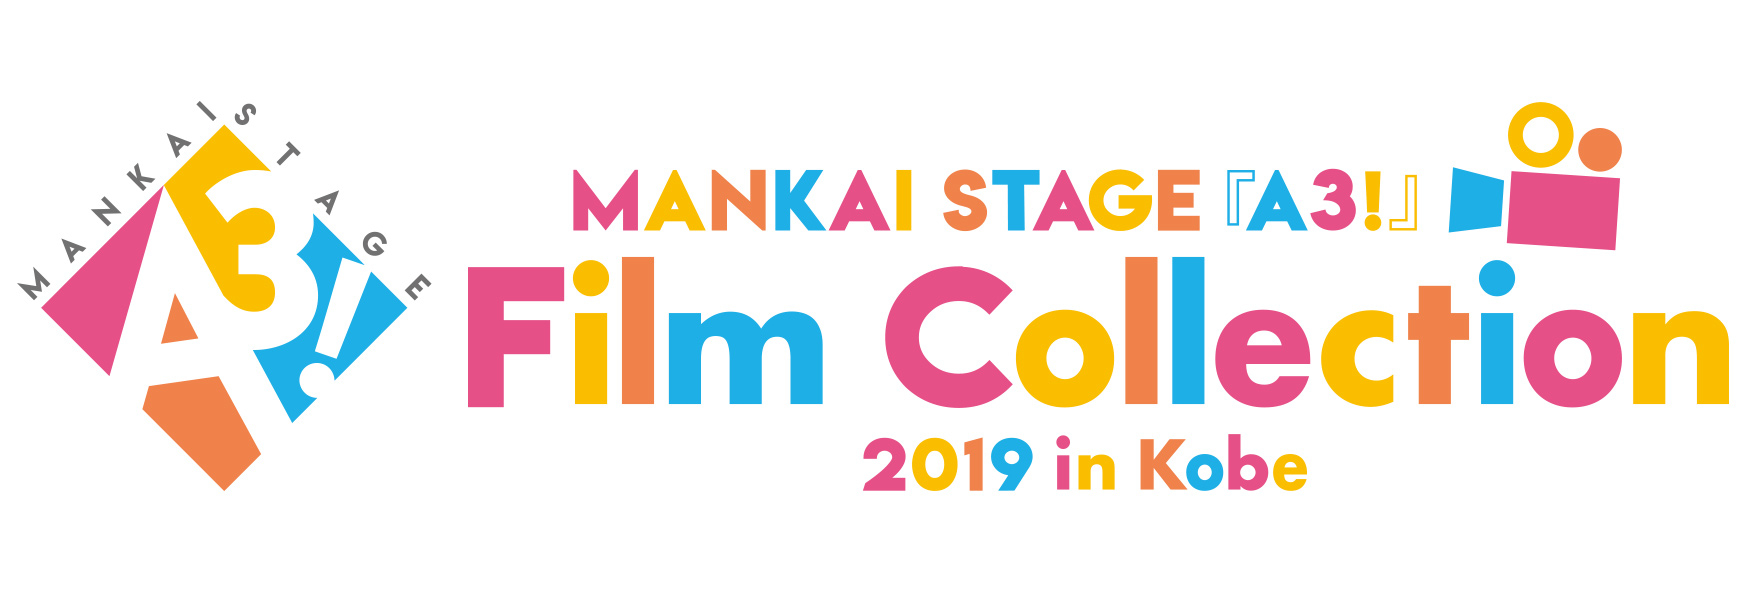 MANKAI STAGE『A3!』今までに上演された3作品の映像上映会や企画展が行われる初のイベント「MANKAI STAGE『A3!』Film Collection 2019 in Kobe」開催決定！の画像-1